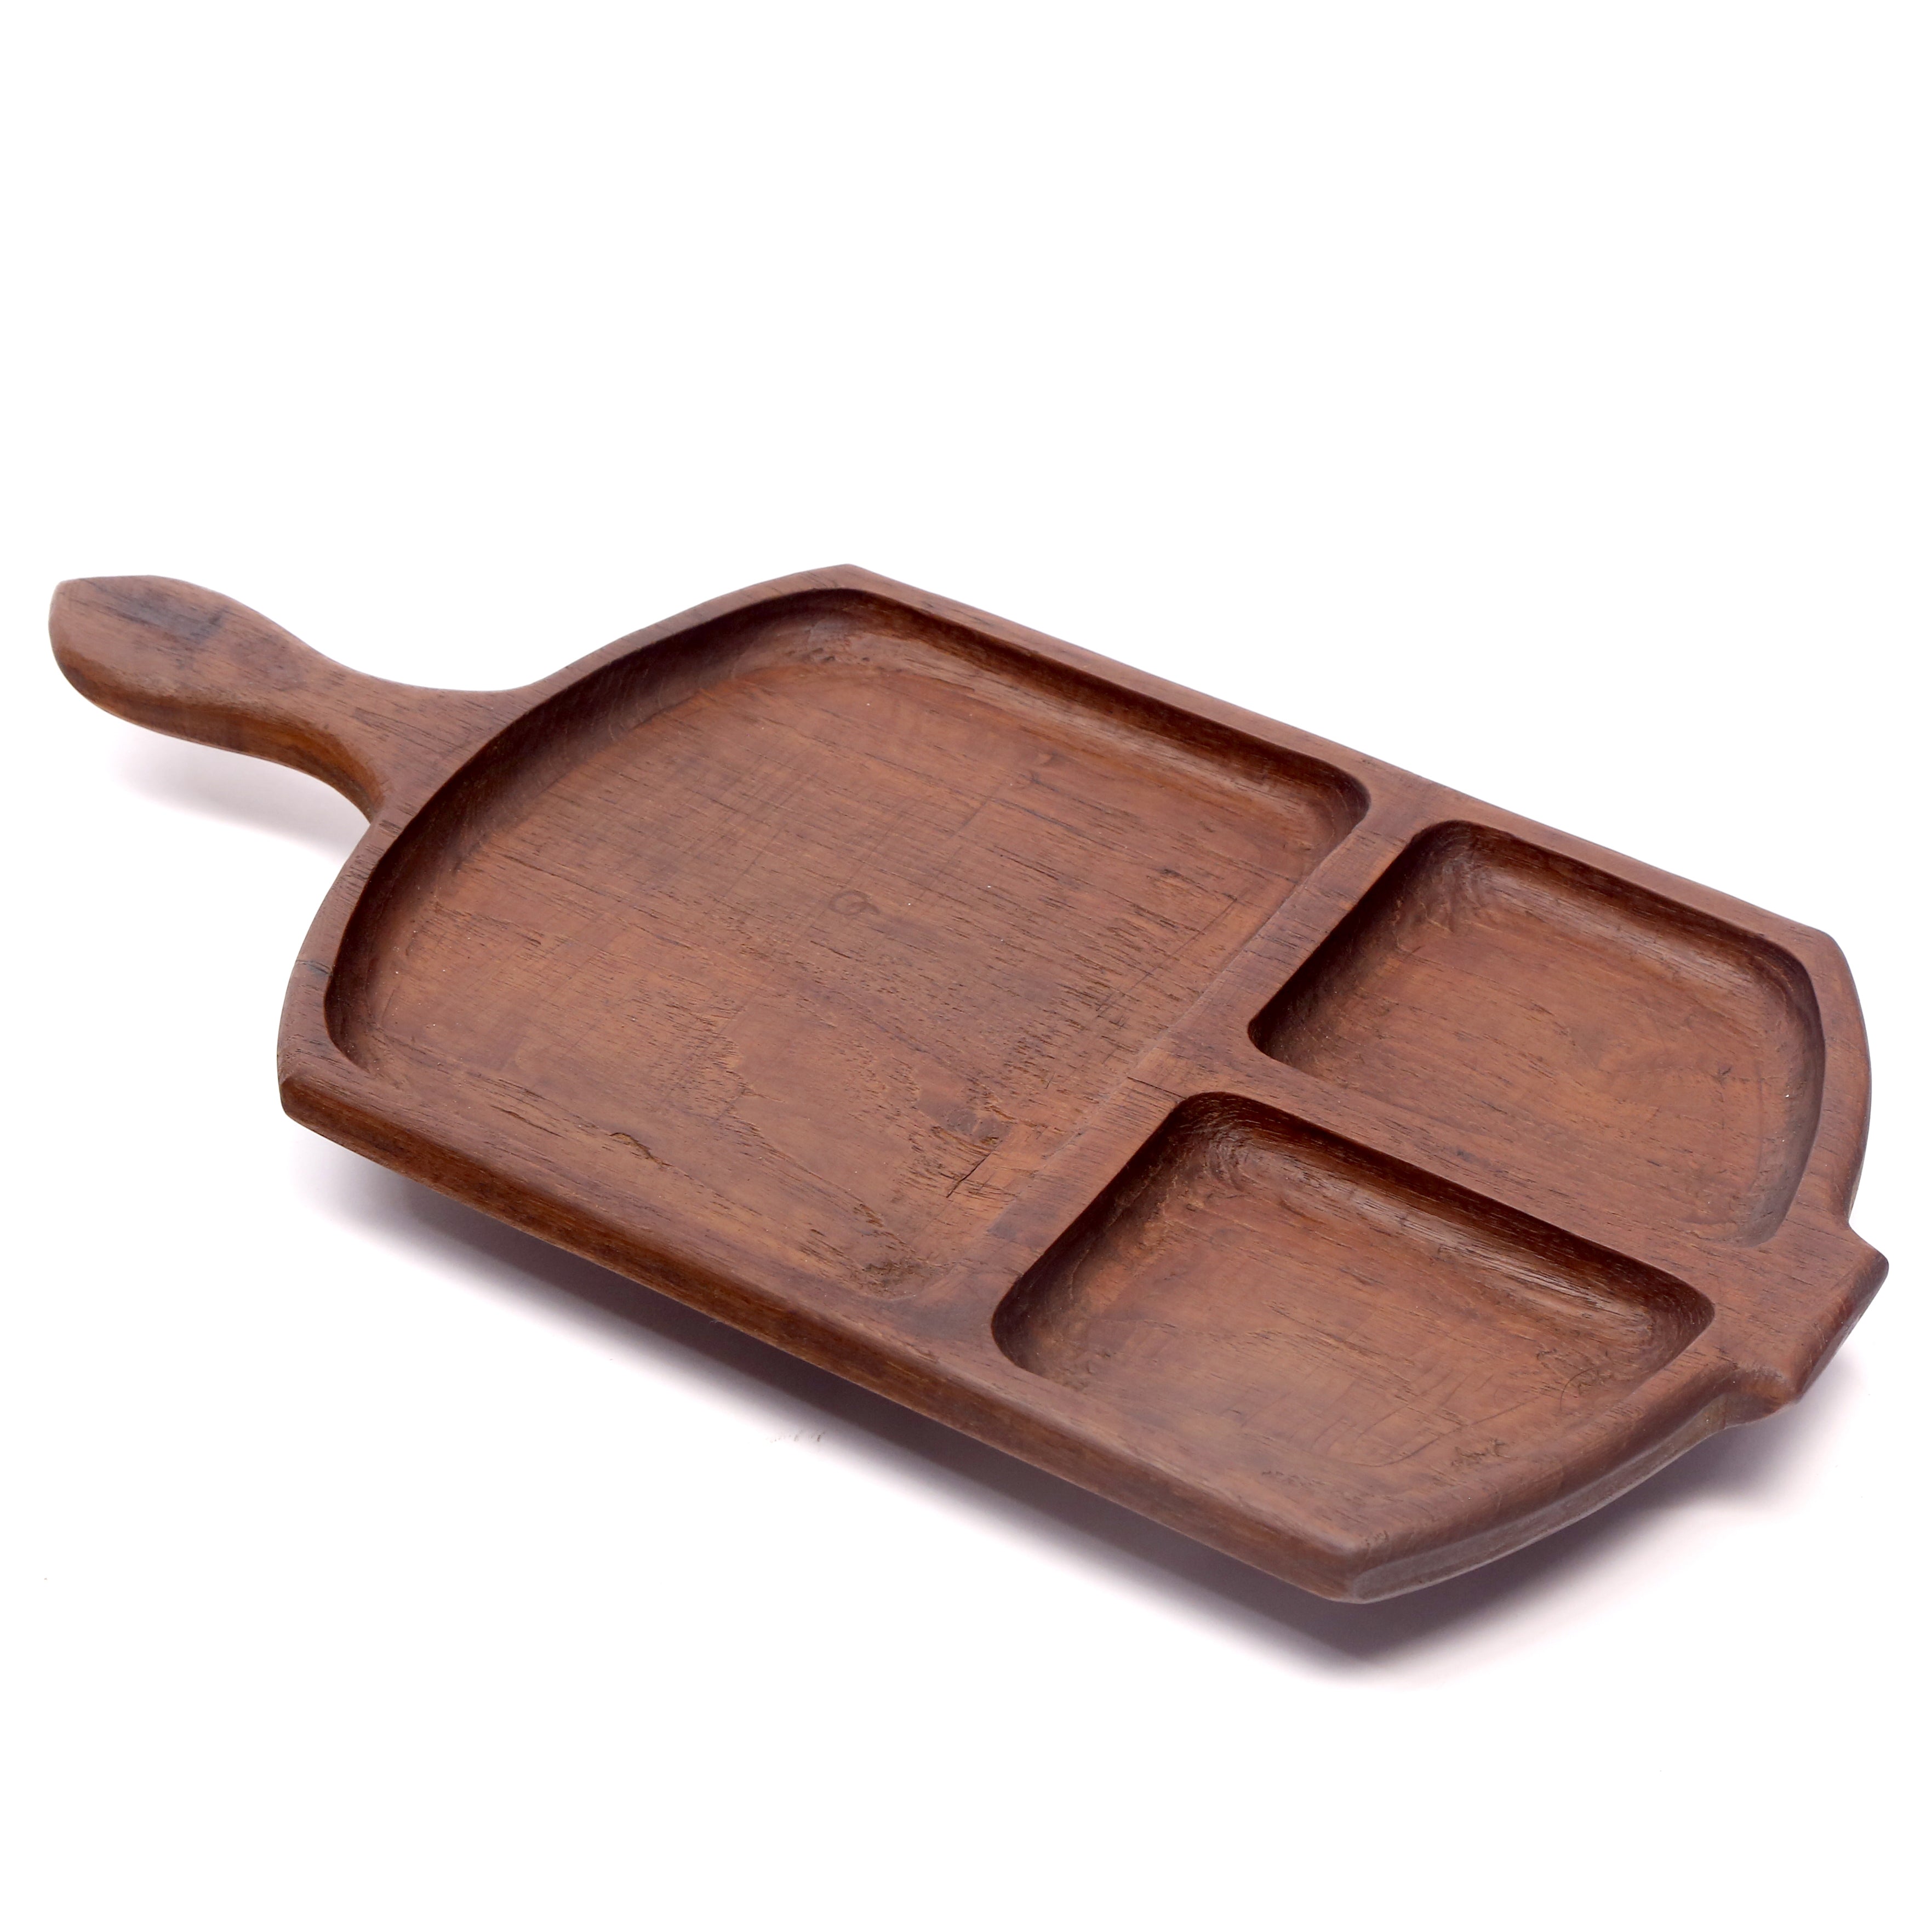 Pan Shaped Wooden Tray Platter